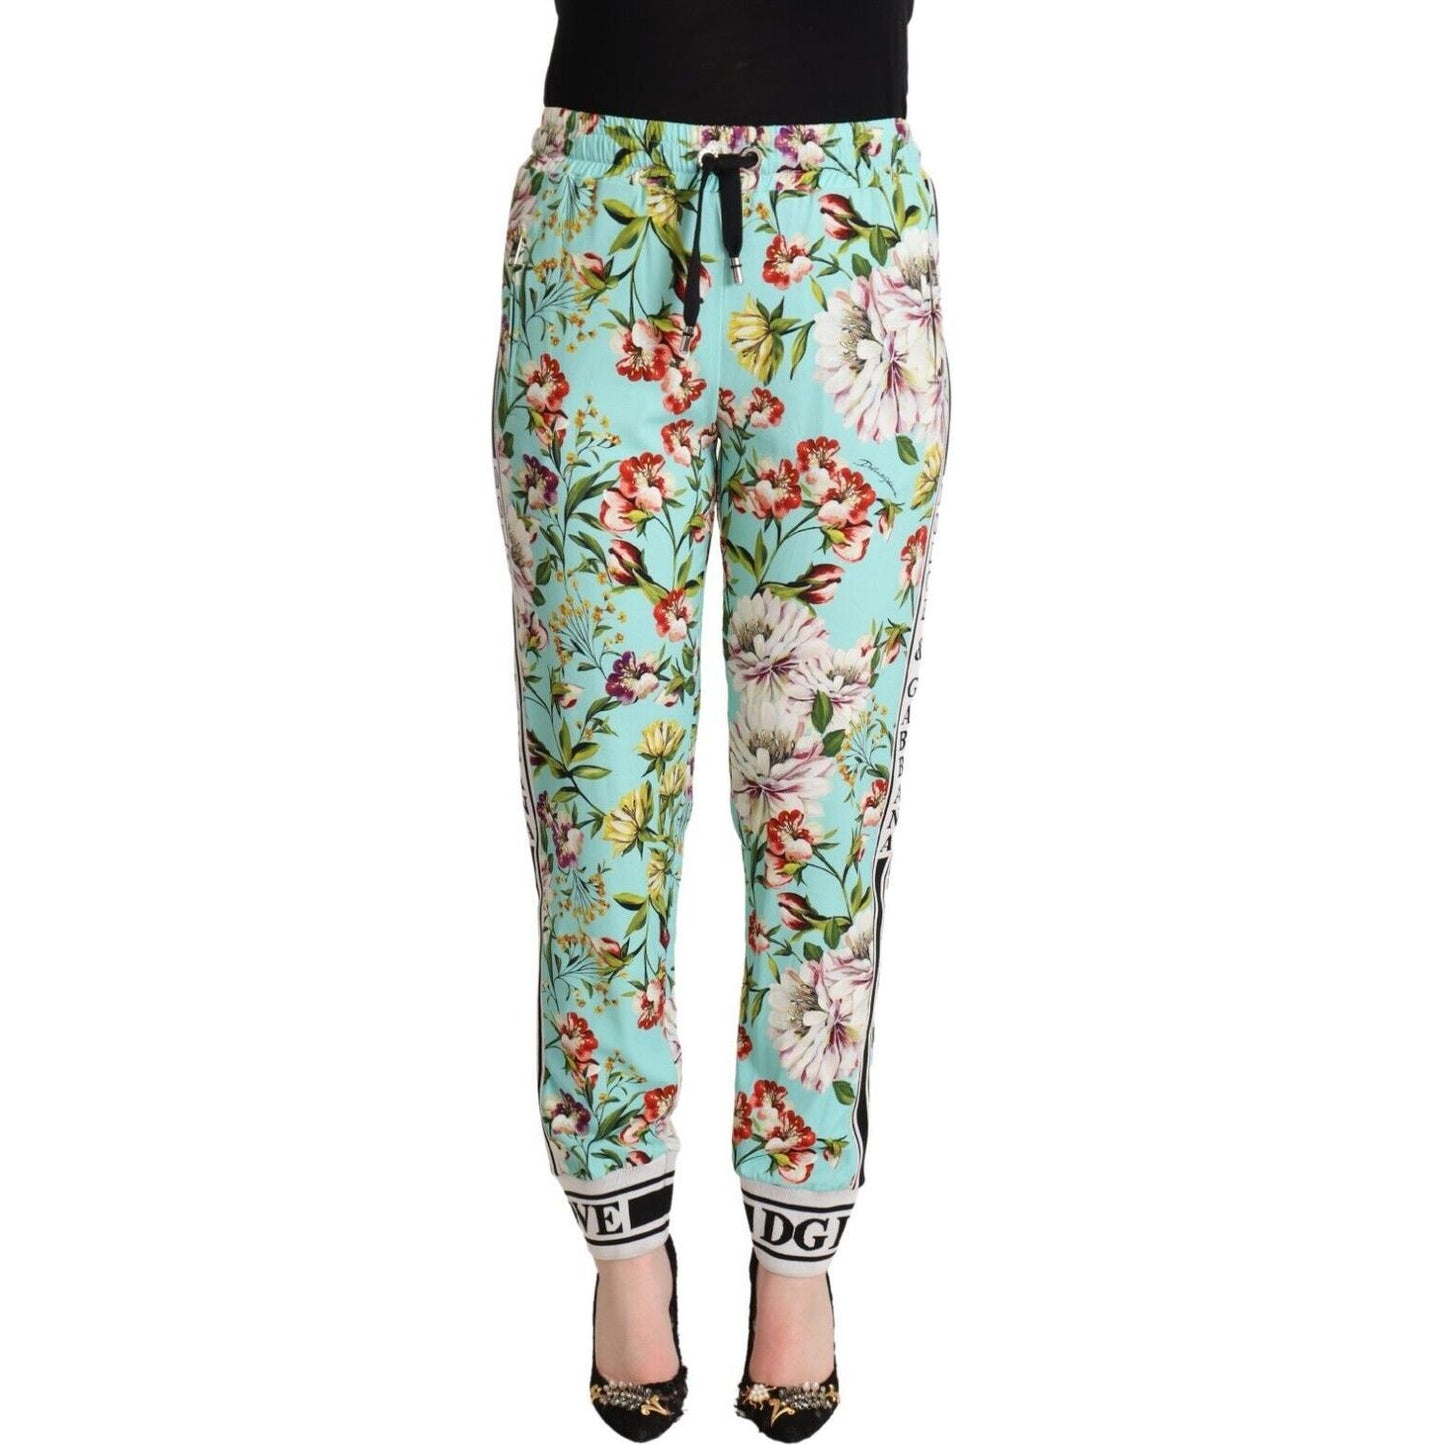 Dolce & Gabbana Floral Viscose Jogger Pants in Green green-floral-print-mid-waist-trouser-jogger-pants